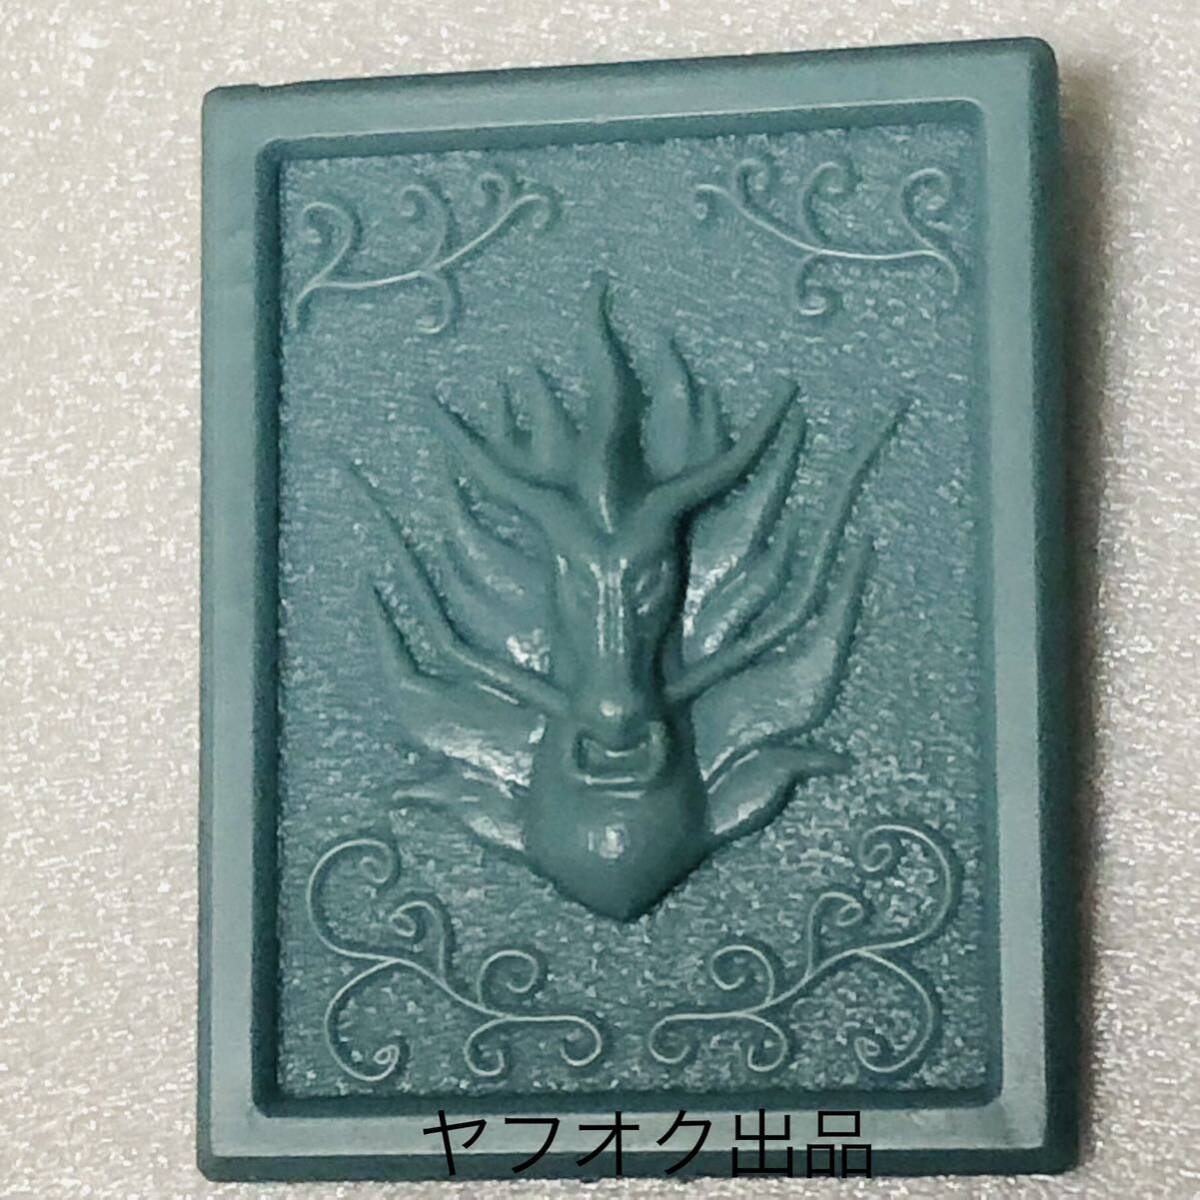  Saint Seiya ... плащаница большой серия не продается Dragon Cross box синий медь плащаница Bandai Saint Seiya Myth Cloth Showa Chogokin избранные товары 